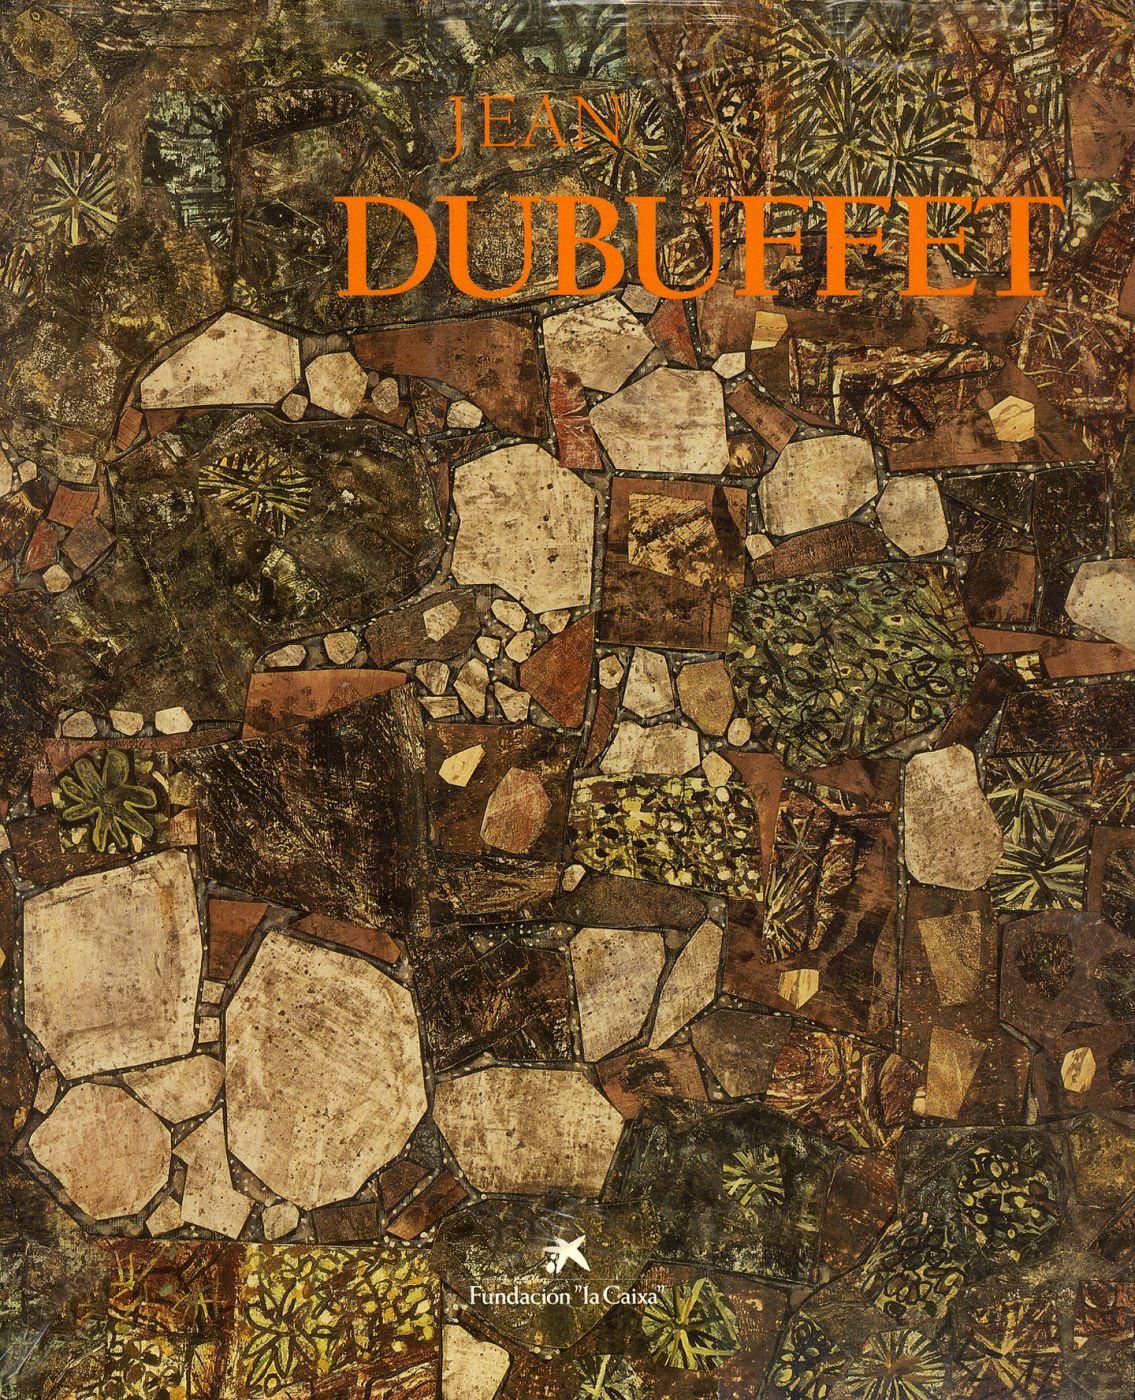 Jean Dubuffet: Del paisaje fisico al paisaje mental (Fundació Caixa)